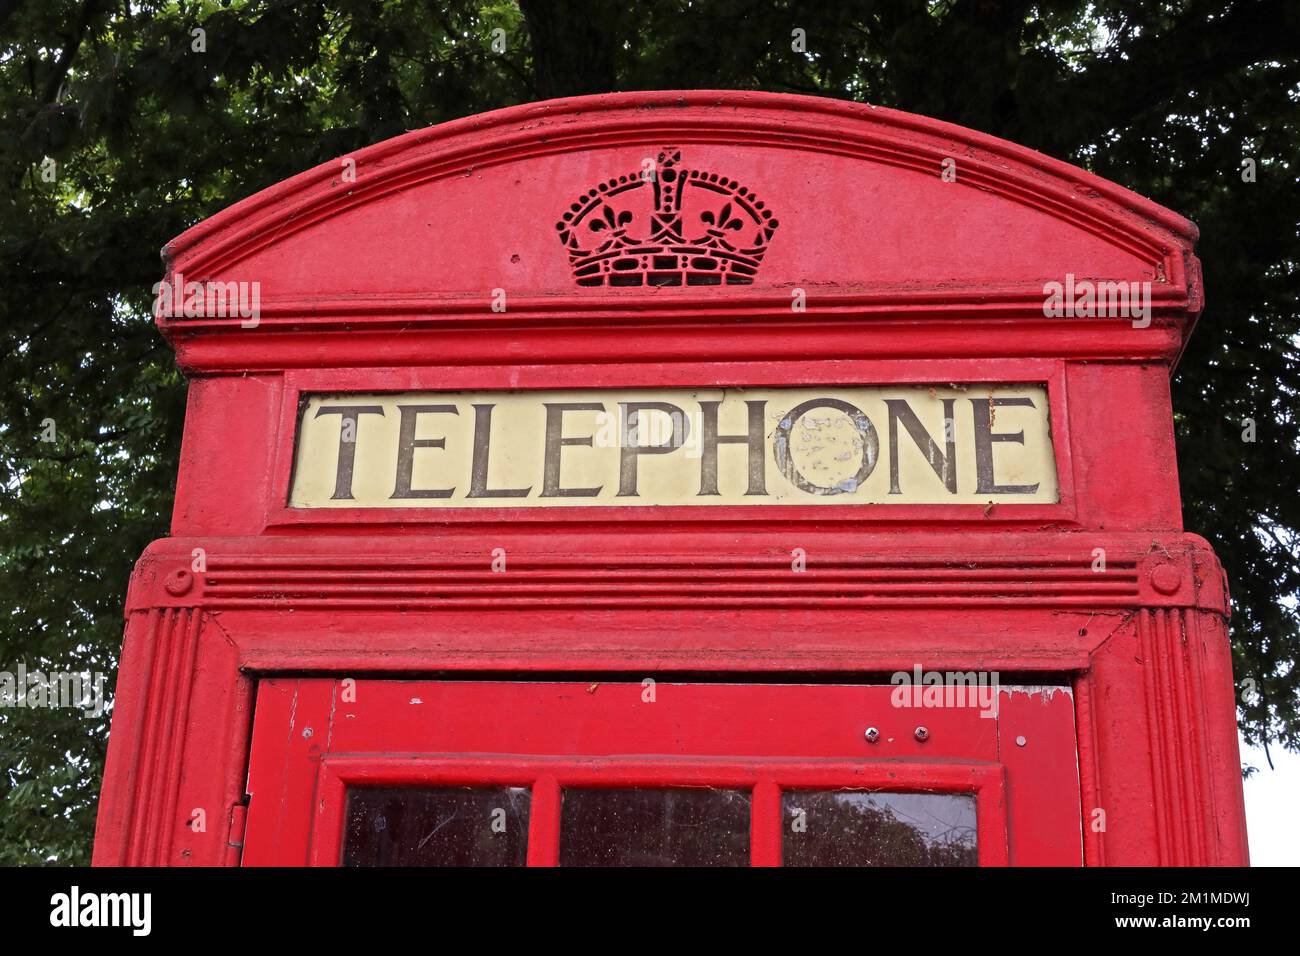 Red British Public Telephone Box, K2 Giles Gilbert Scott Red Phone Box, in Regents Park, North London, England, UK, NW1 4NR Stockfoto